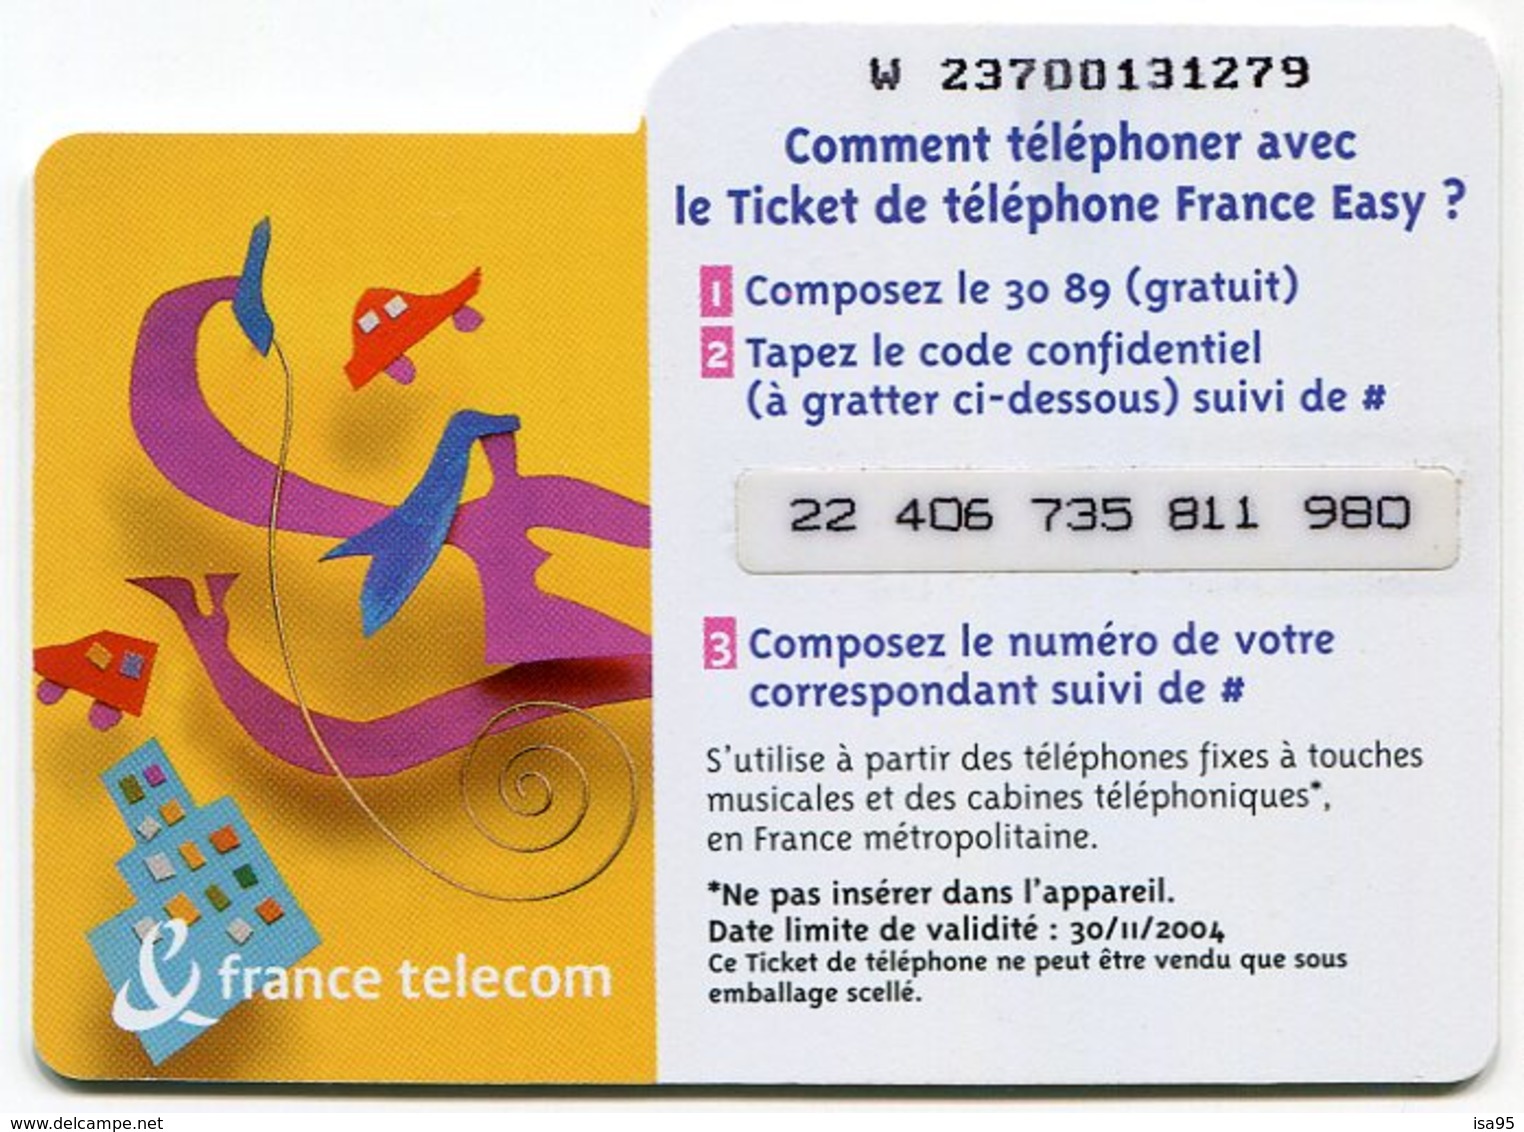 TELECARTE-LE TICKET DE TELEPHONE FRANCE EASY-2004-7.5€ - FT